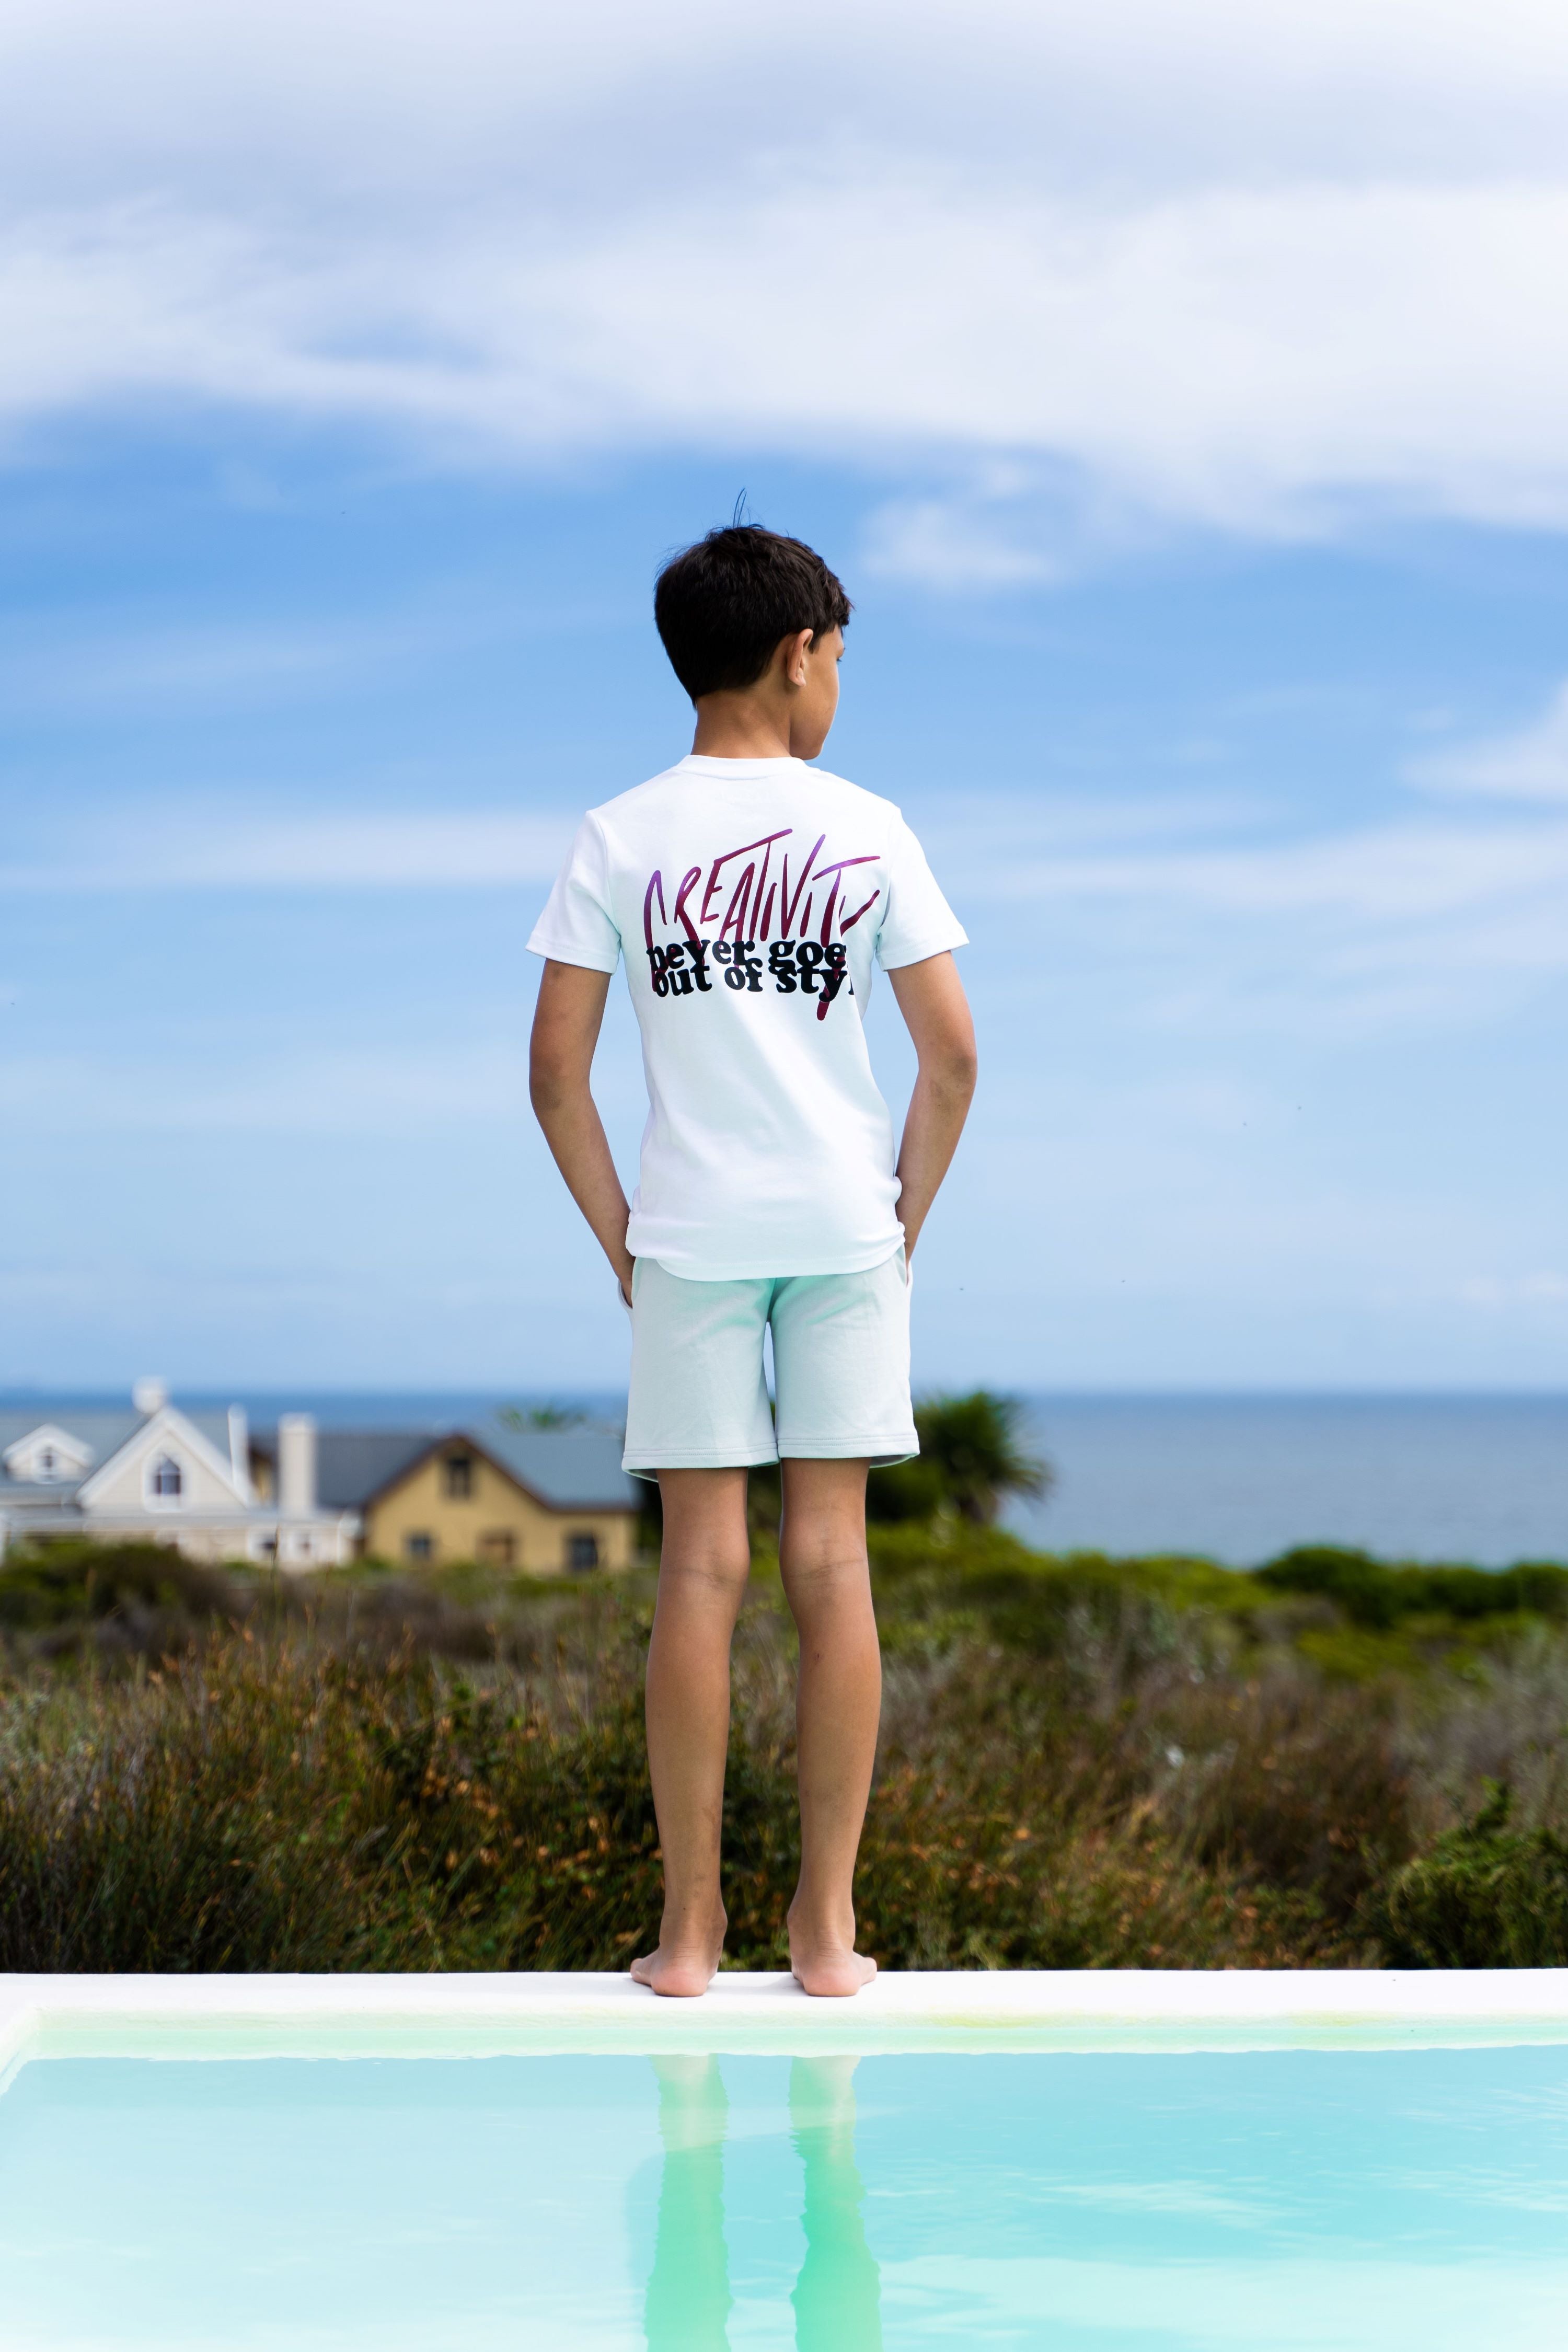 Sea'sons T-shirt warmtegevoelig Creativity White